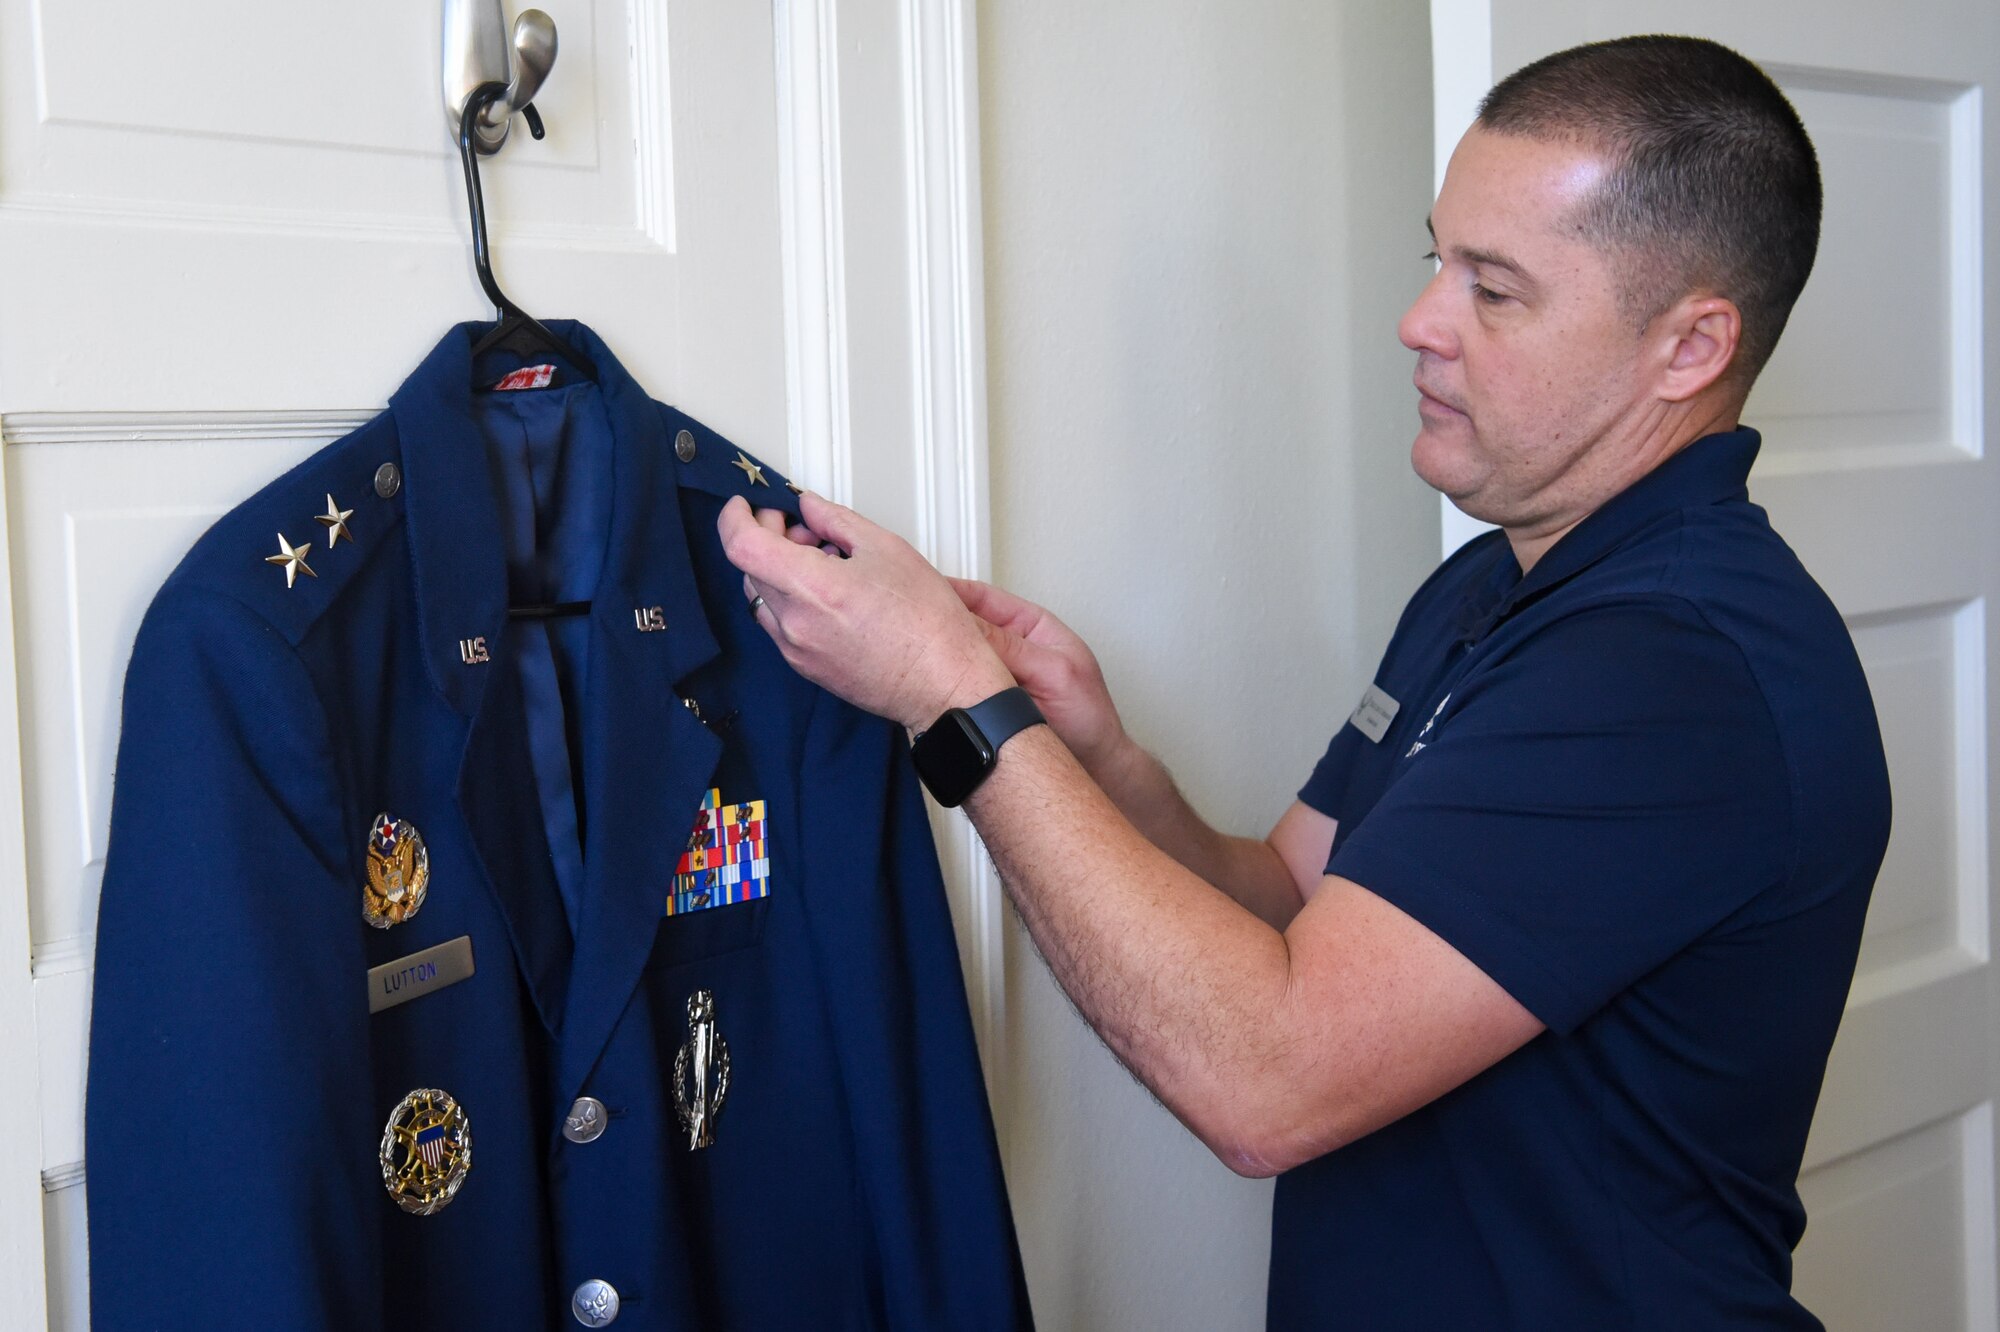 Enlisted aide prepares uniform